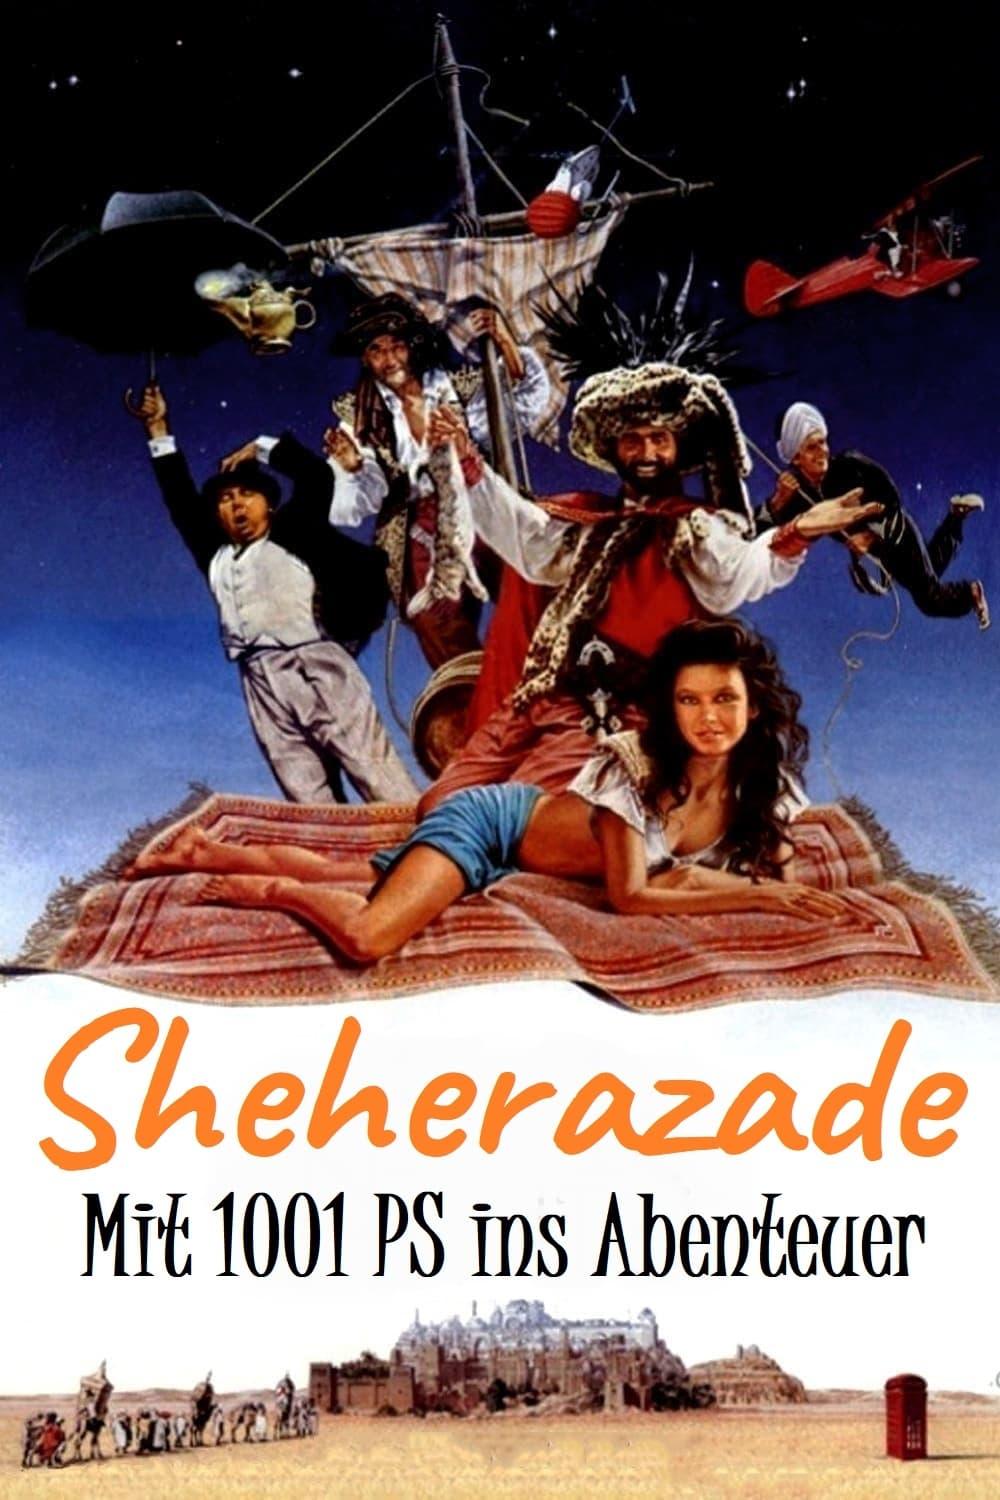 Sheherazade - Mit 1001 PS ins Abenteuer poster